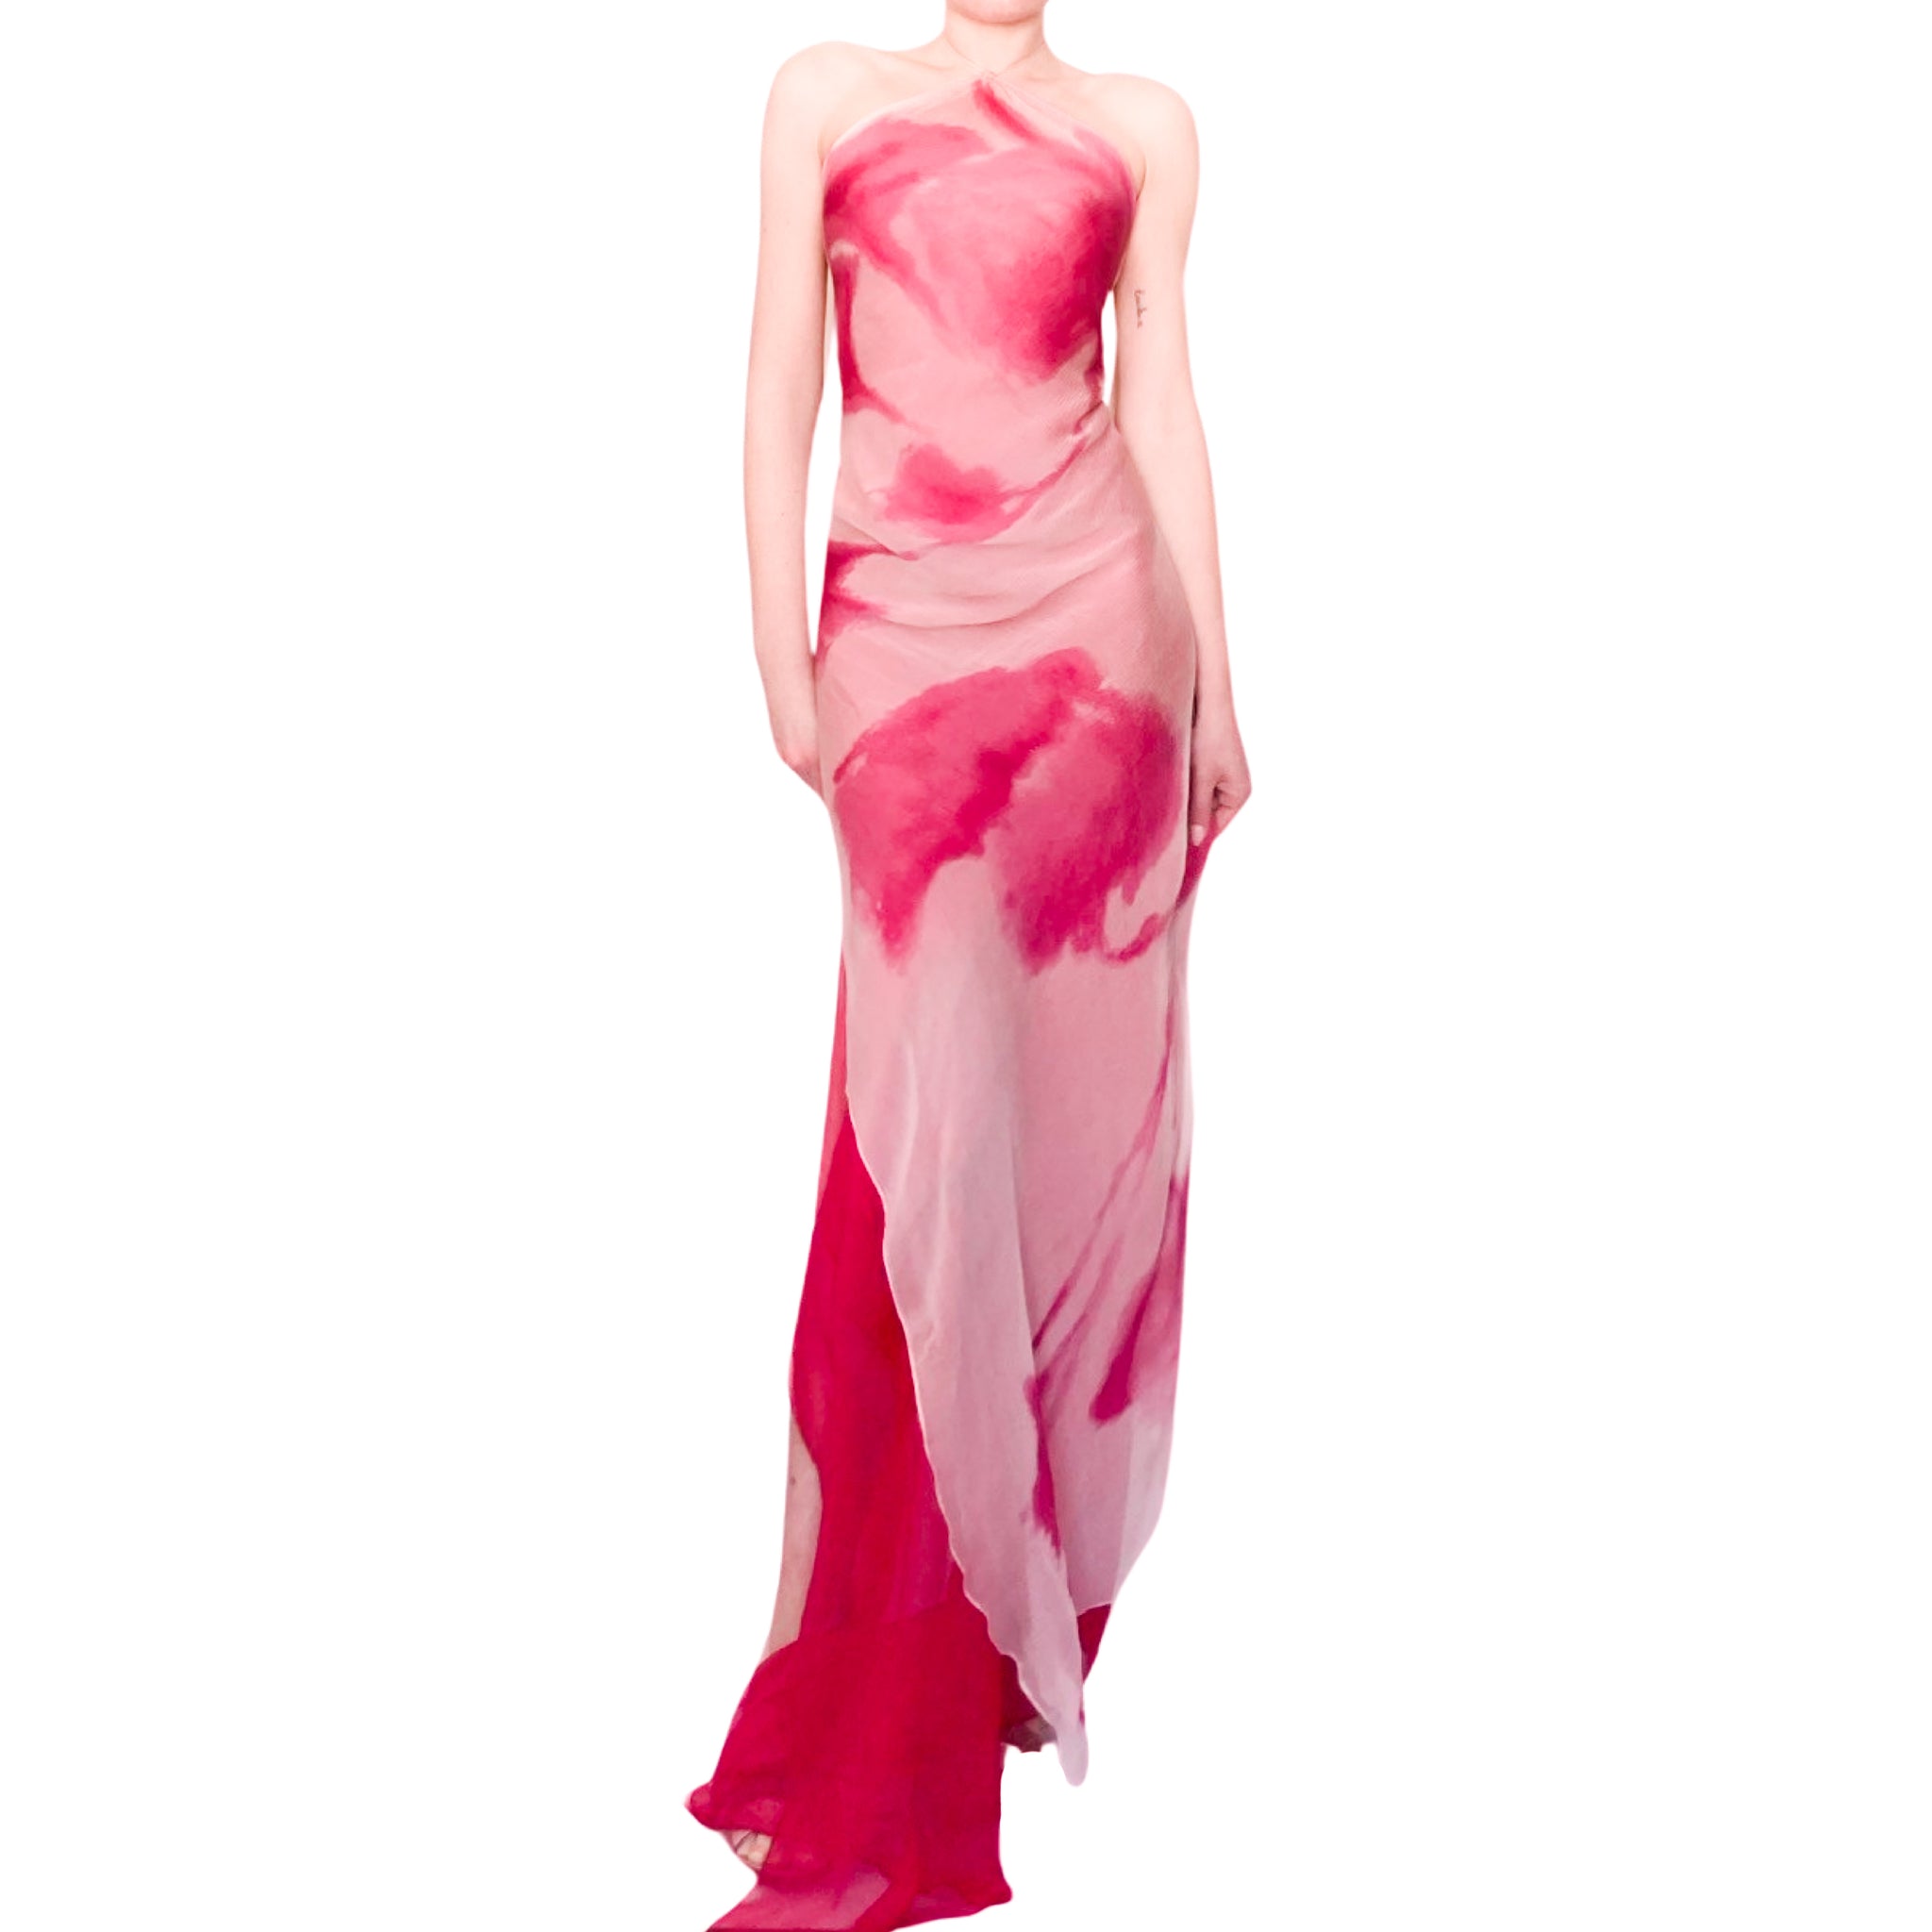 Donna Karan S/S 2000 iconic silk gown